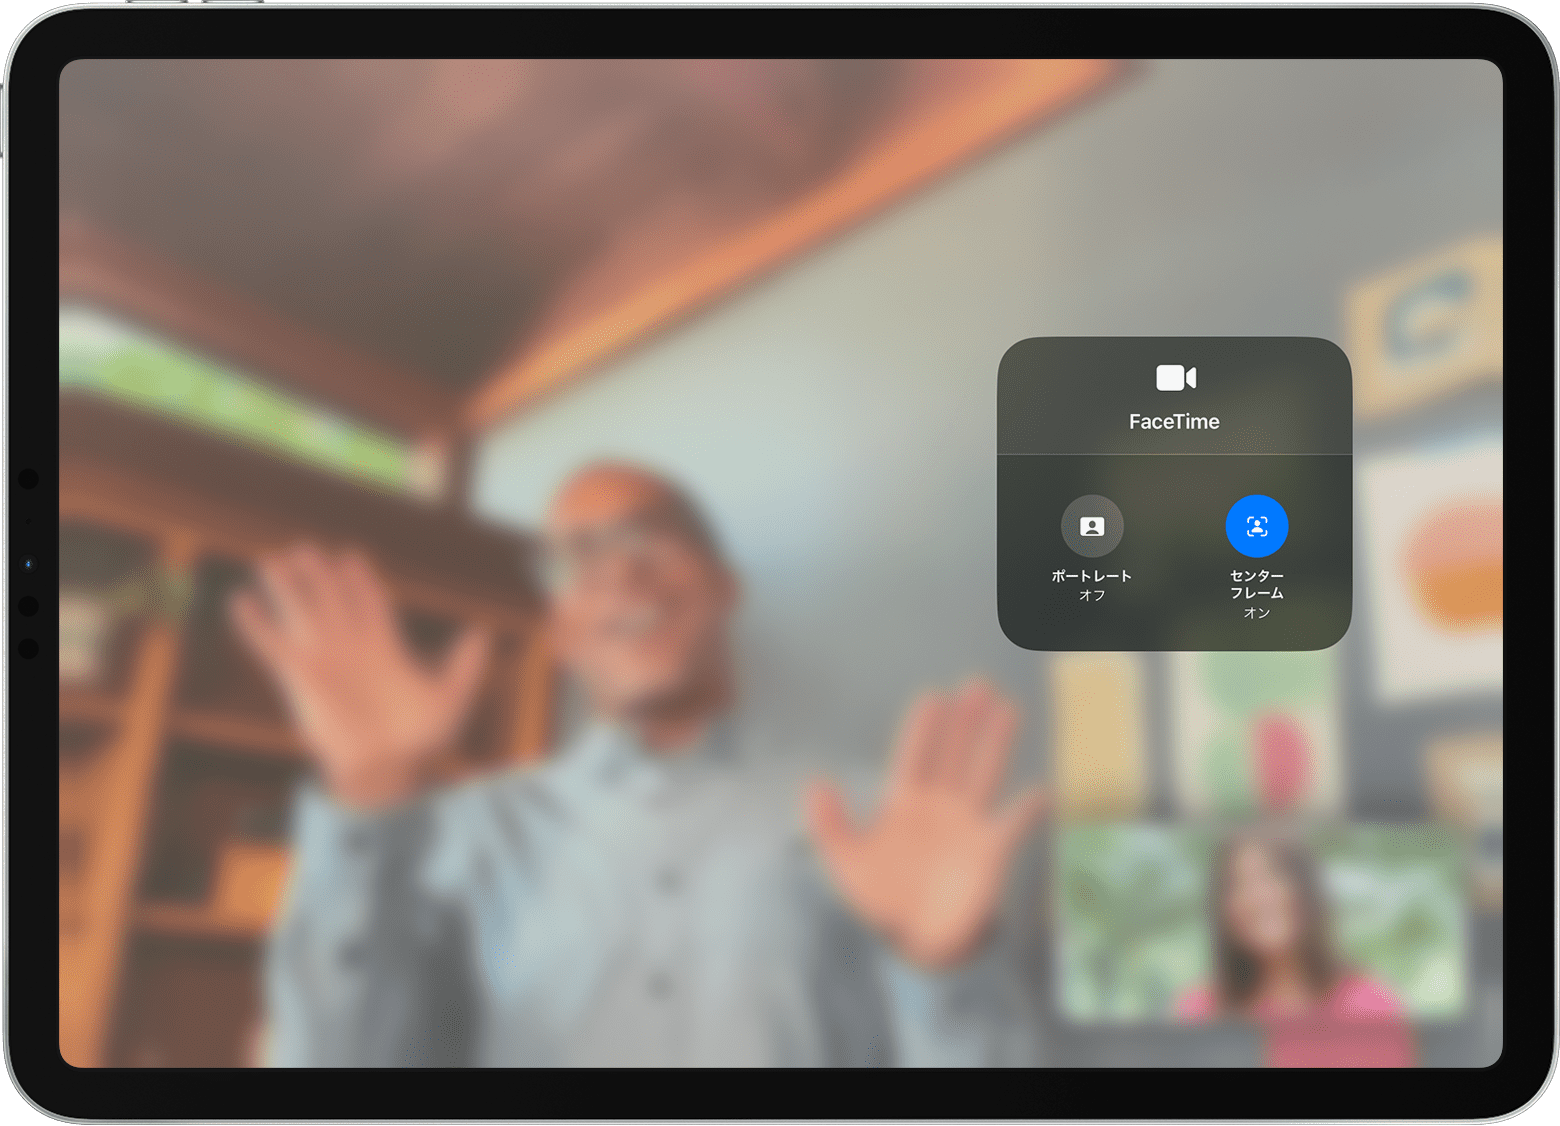 iPad で FaceTime の通話画面が開き、ビデオエフェクトのオプションが表示されているところ